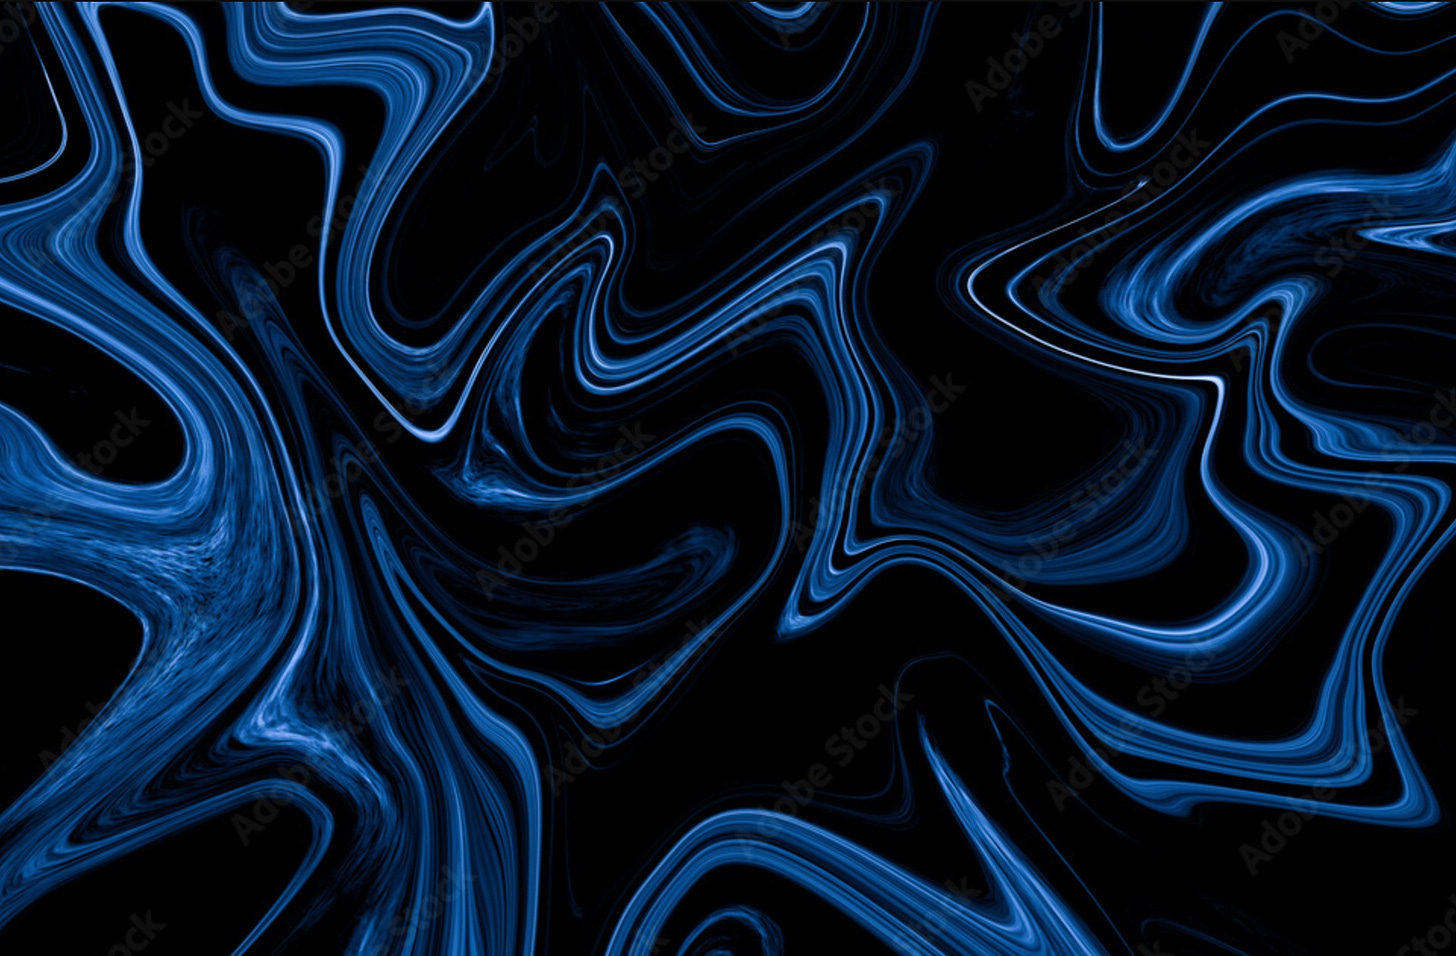 Painting of dark swirled blue and black paint.